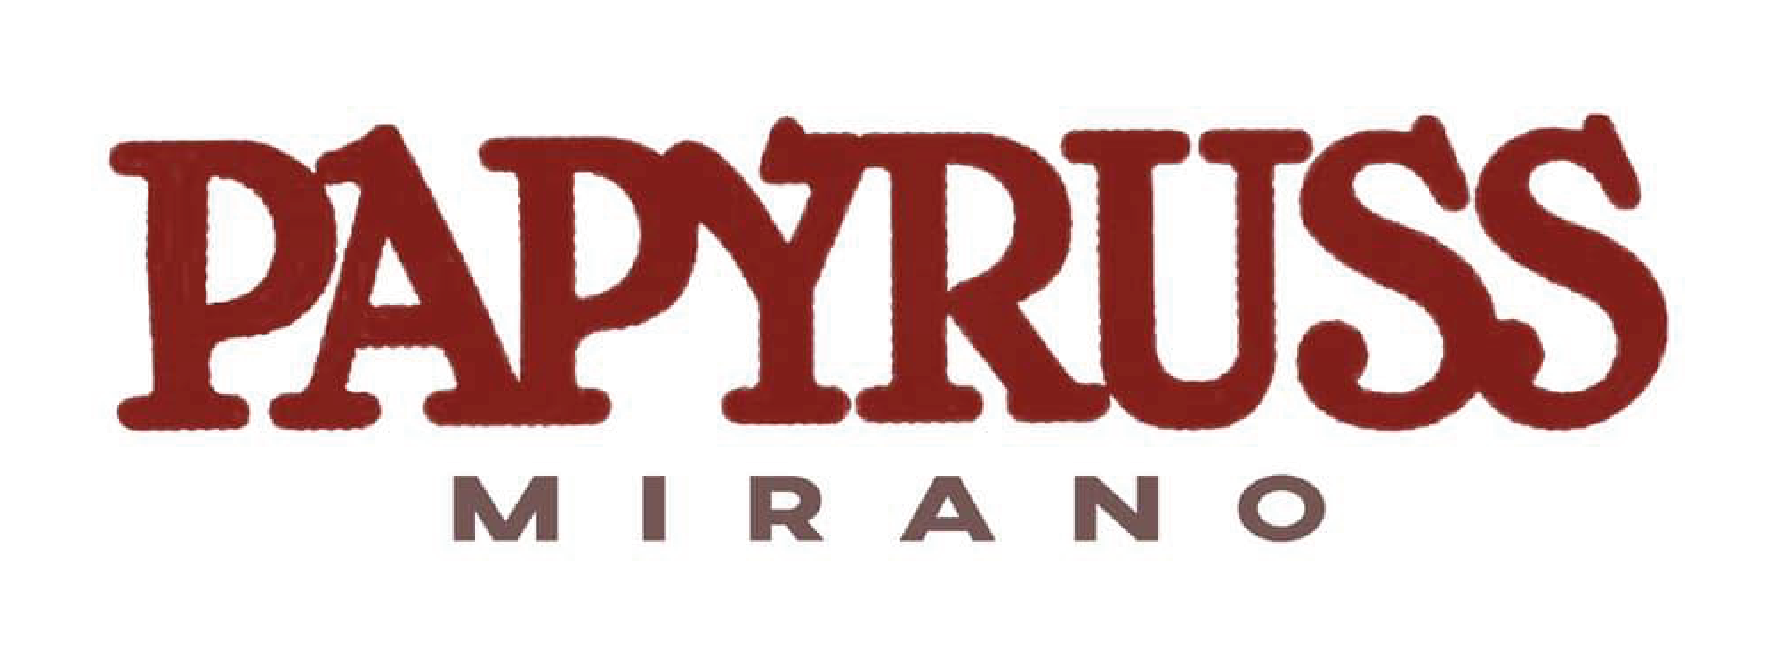 logo papyrus